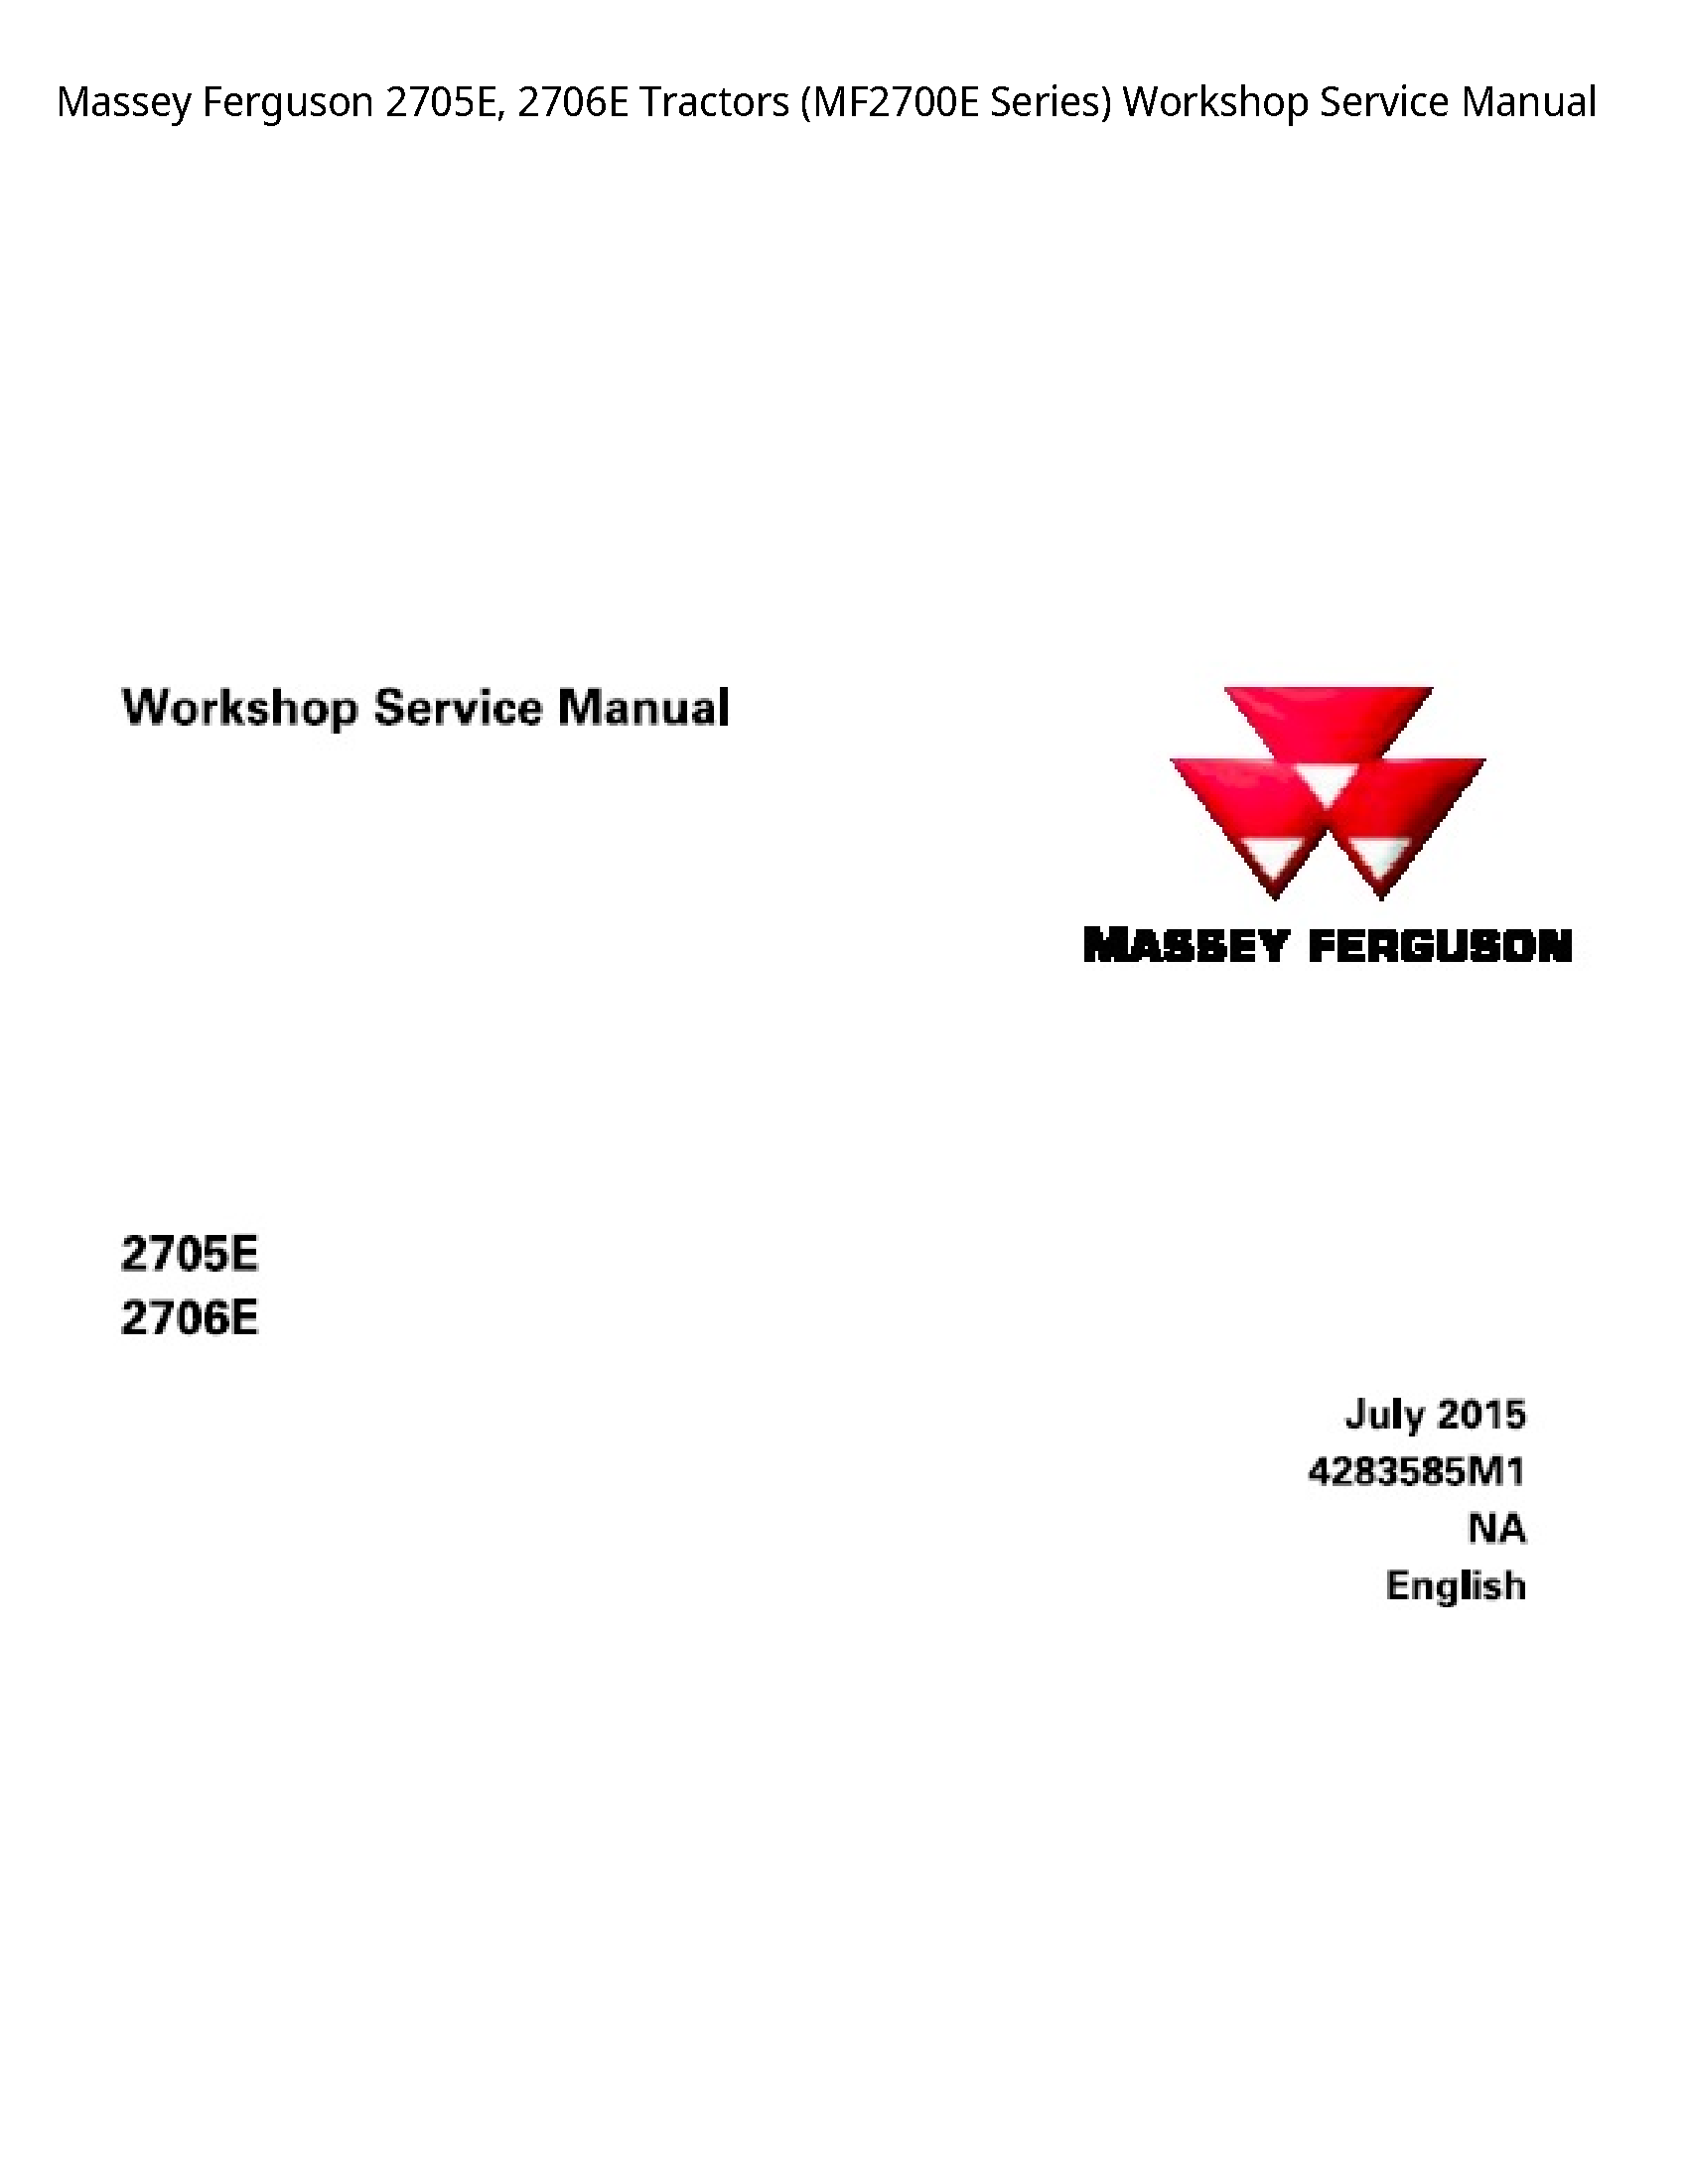 Massey Ferguson 2705E Tractors Series) Service manual